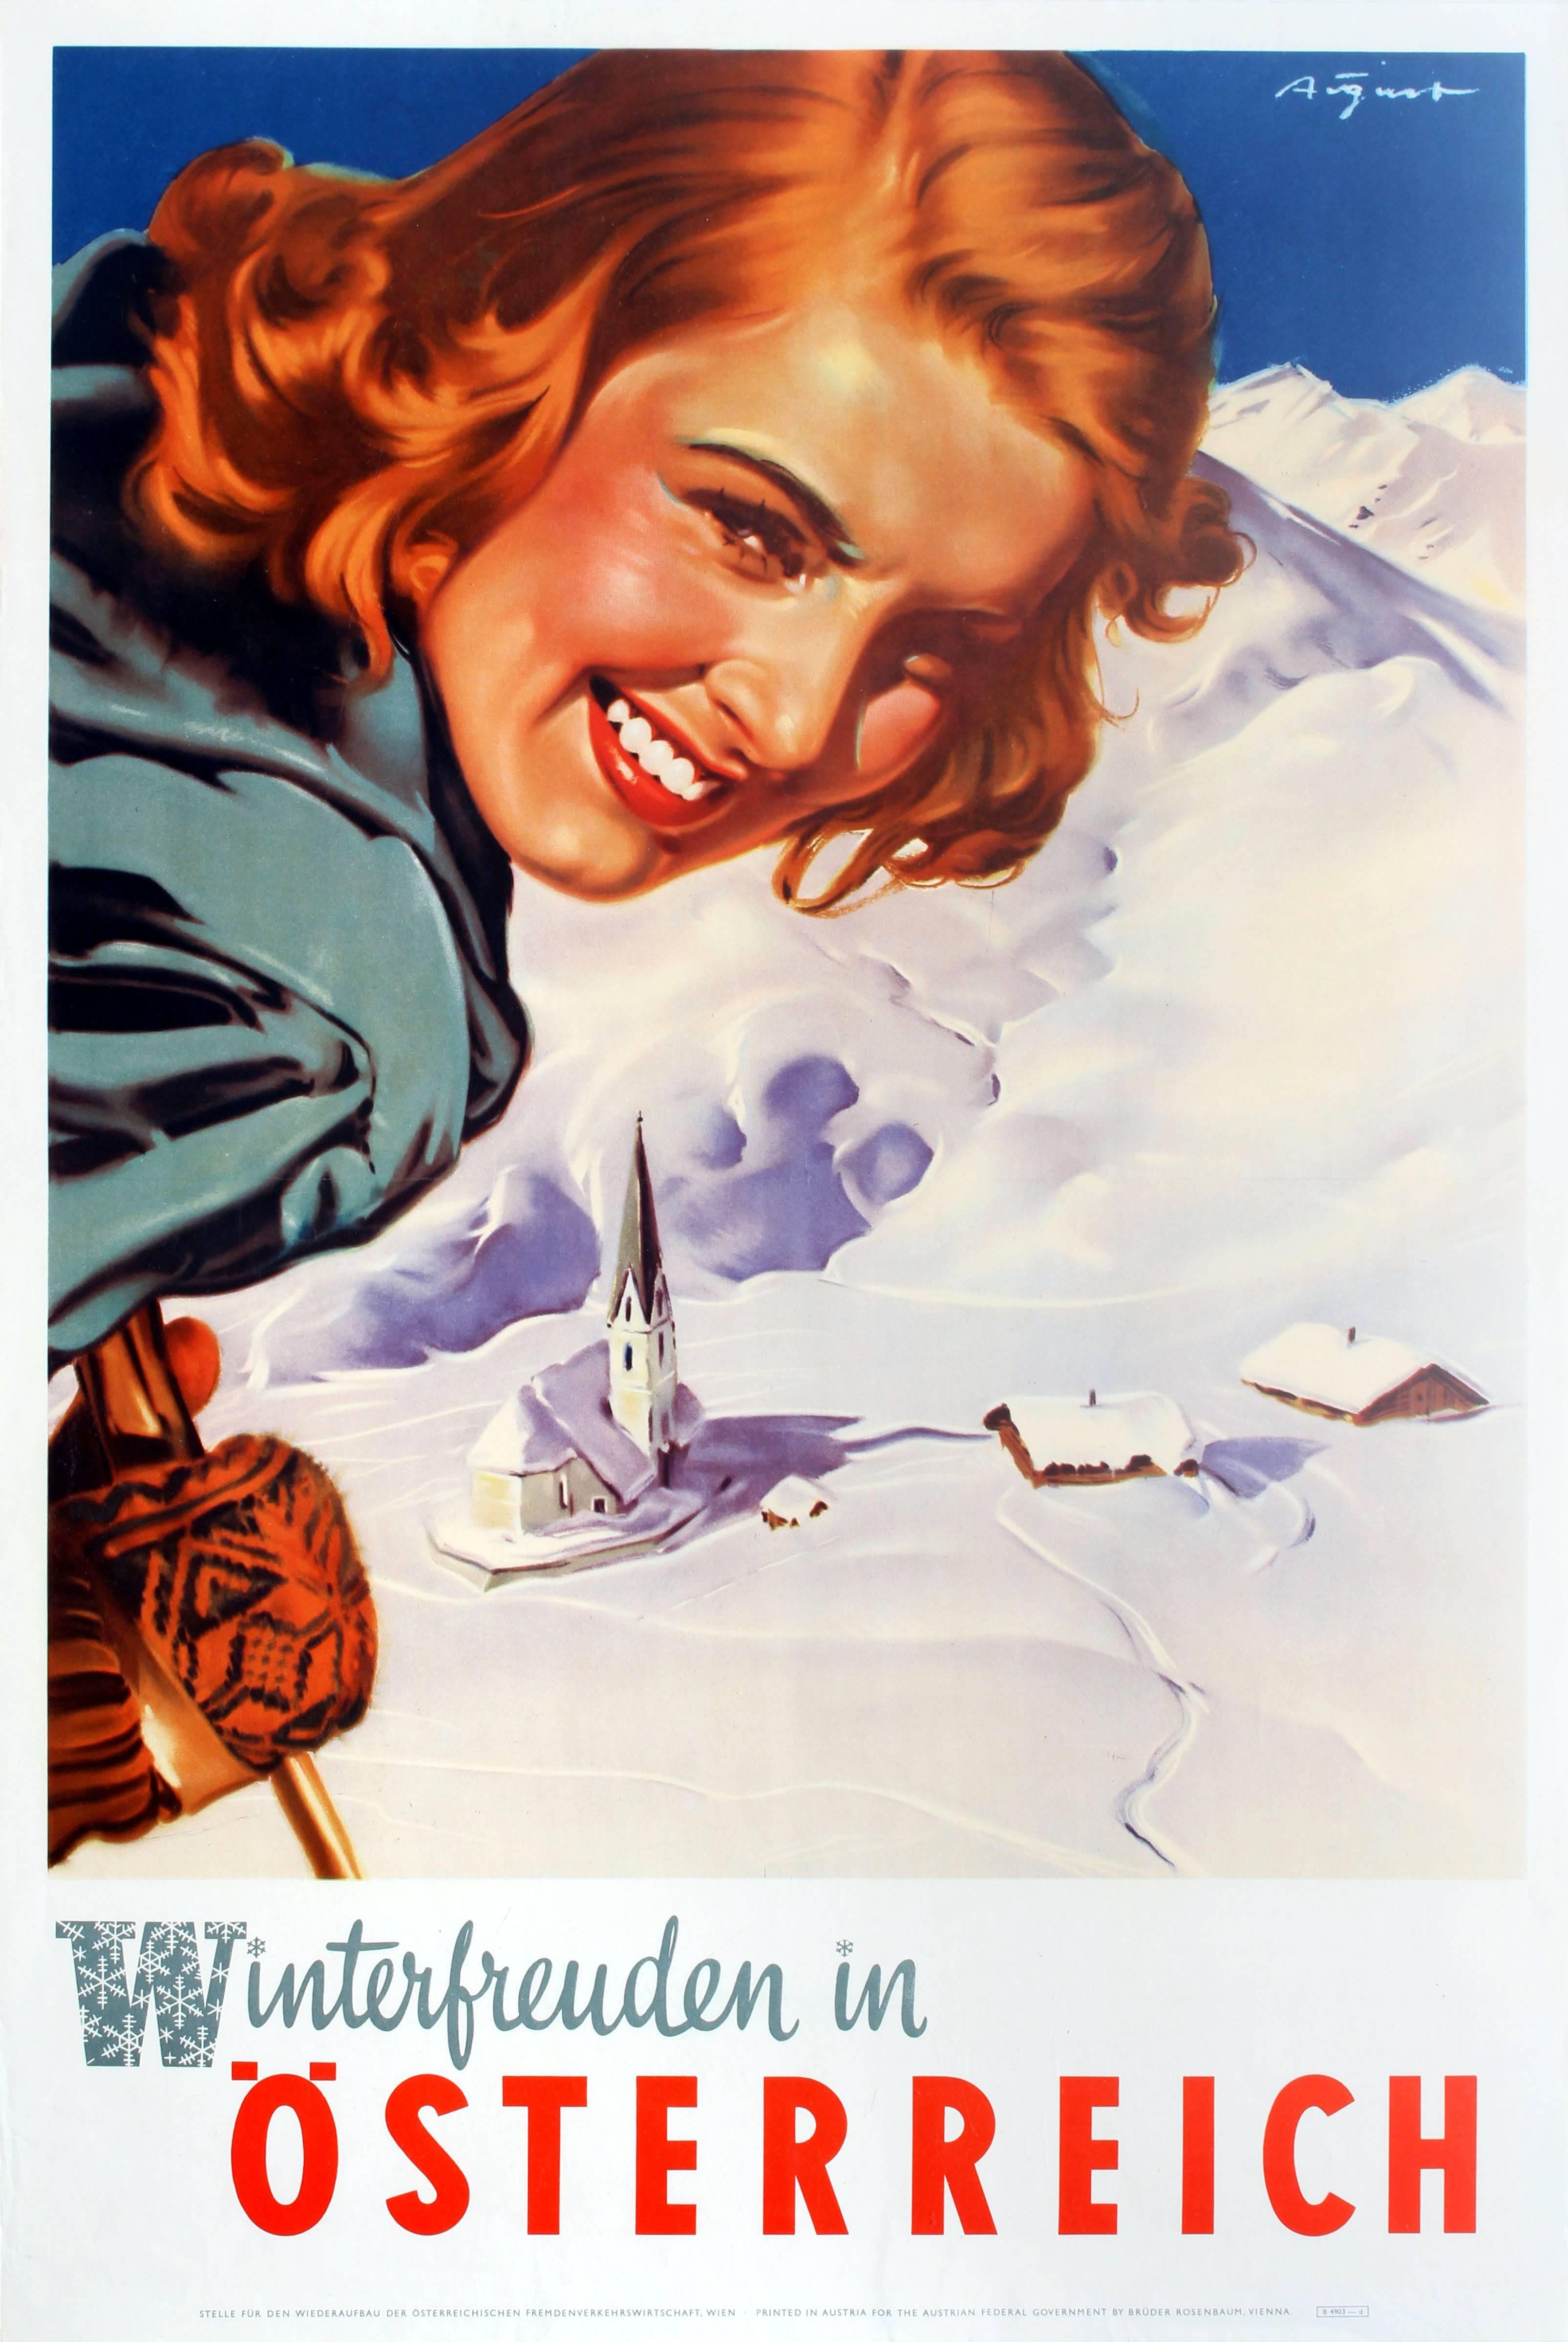 Paul Aigner Print - Original Vintage Skiing Poster By Aigner: Winter Pleasures in Austria Osterreich